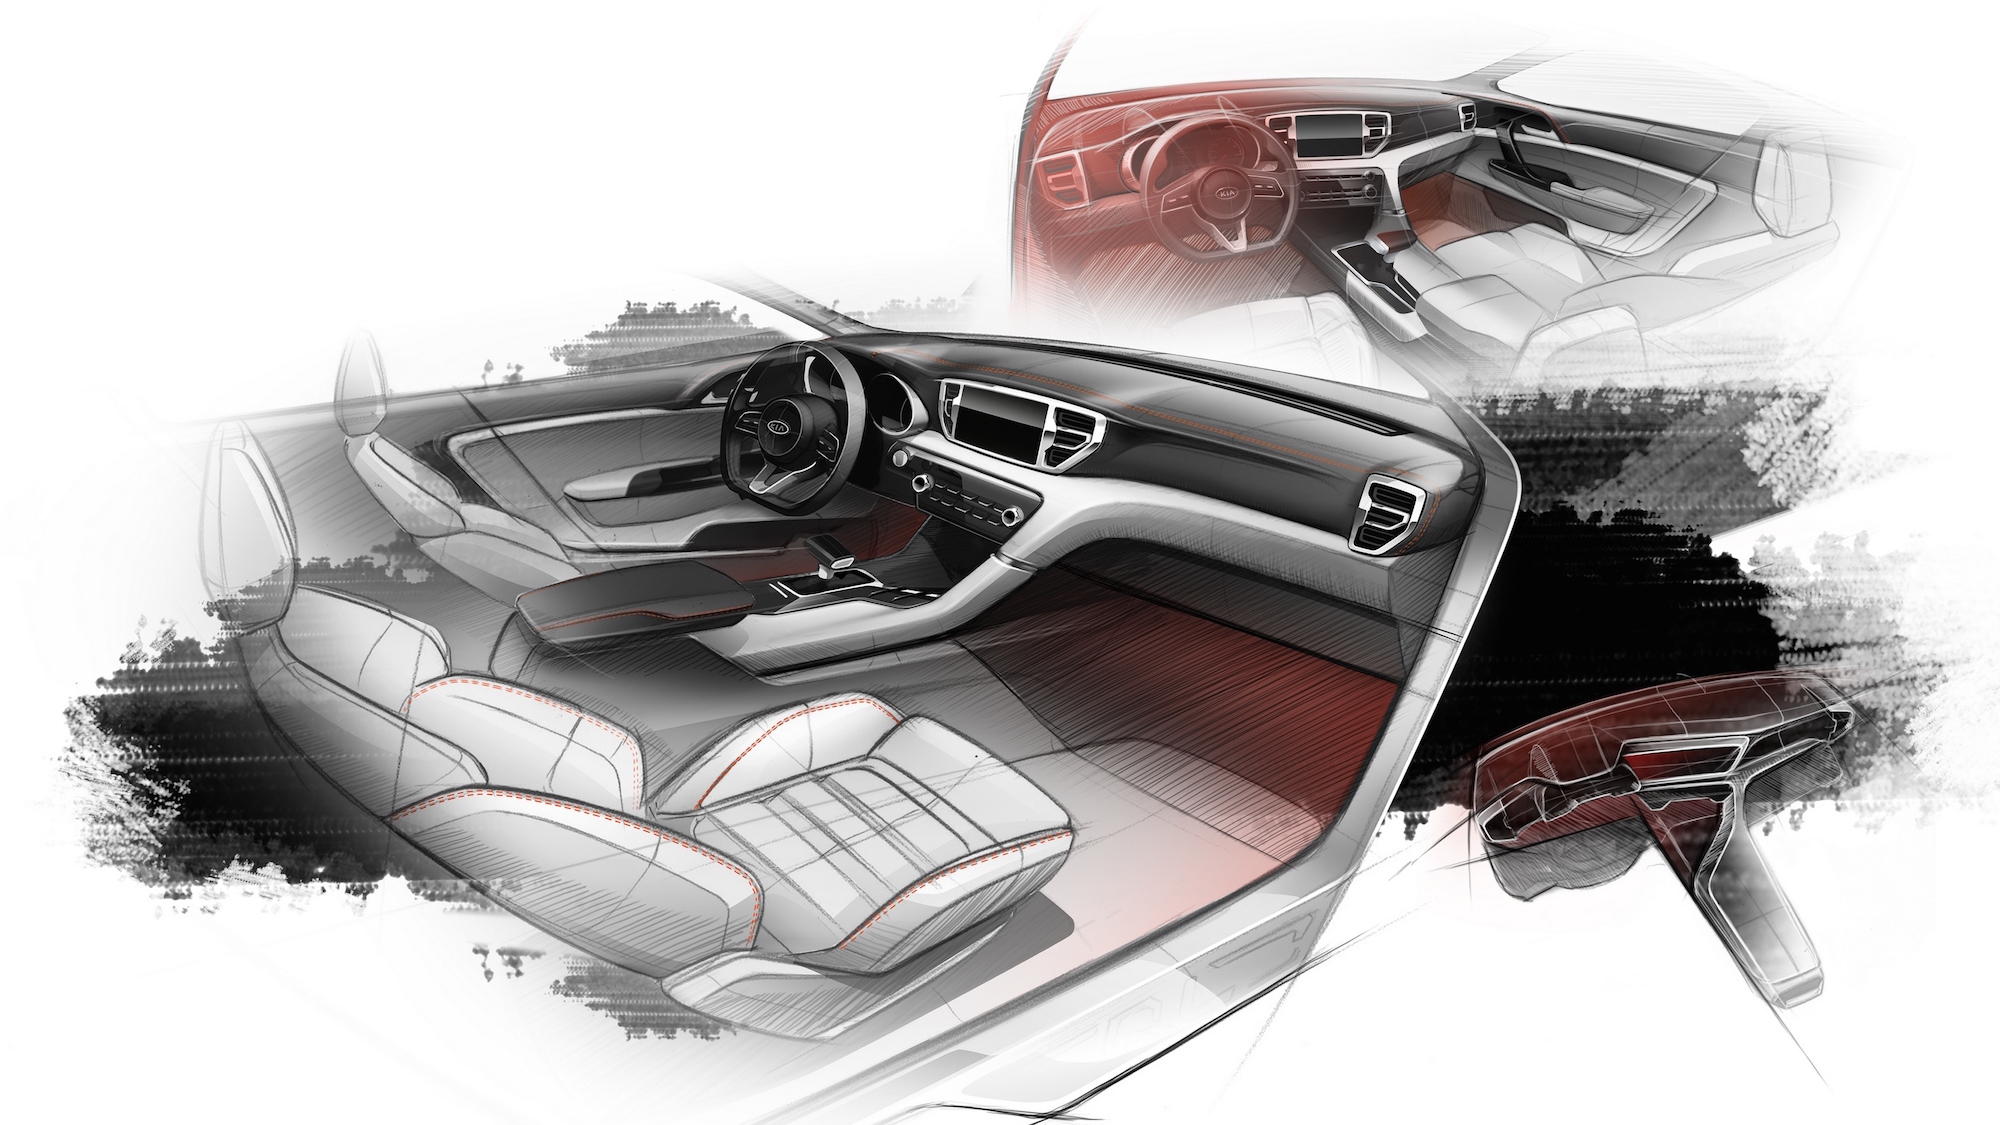 Teaser for 2017 Kia Sportage concept debuting at 2015 Frankfurt Auto Show